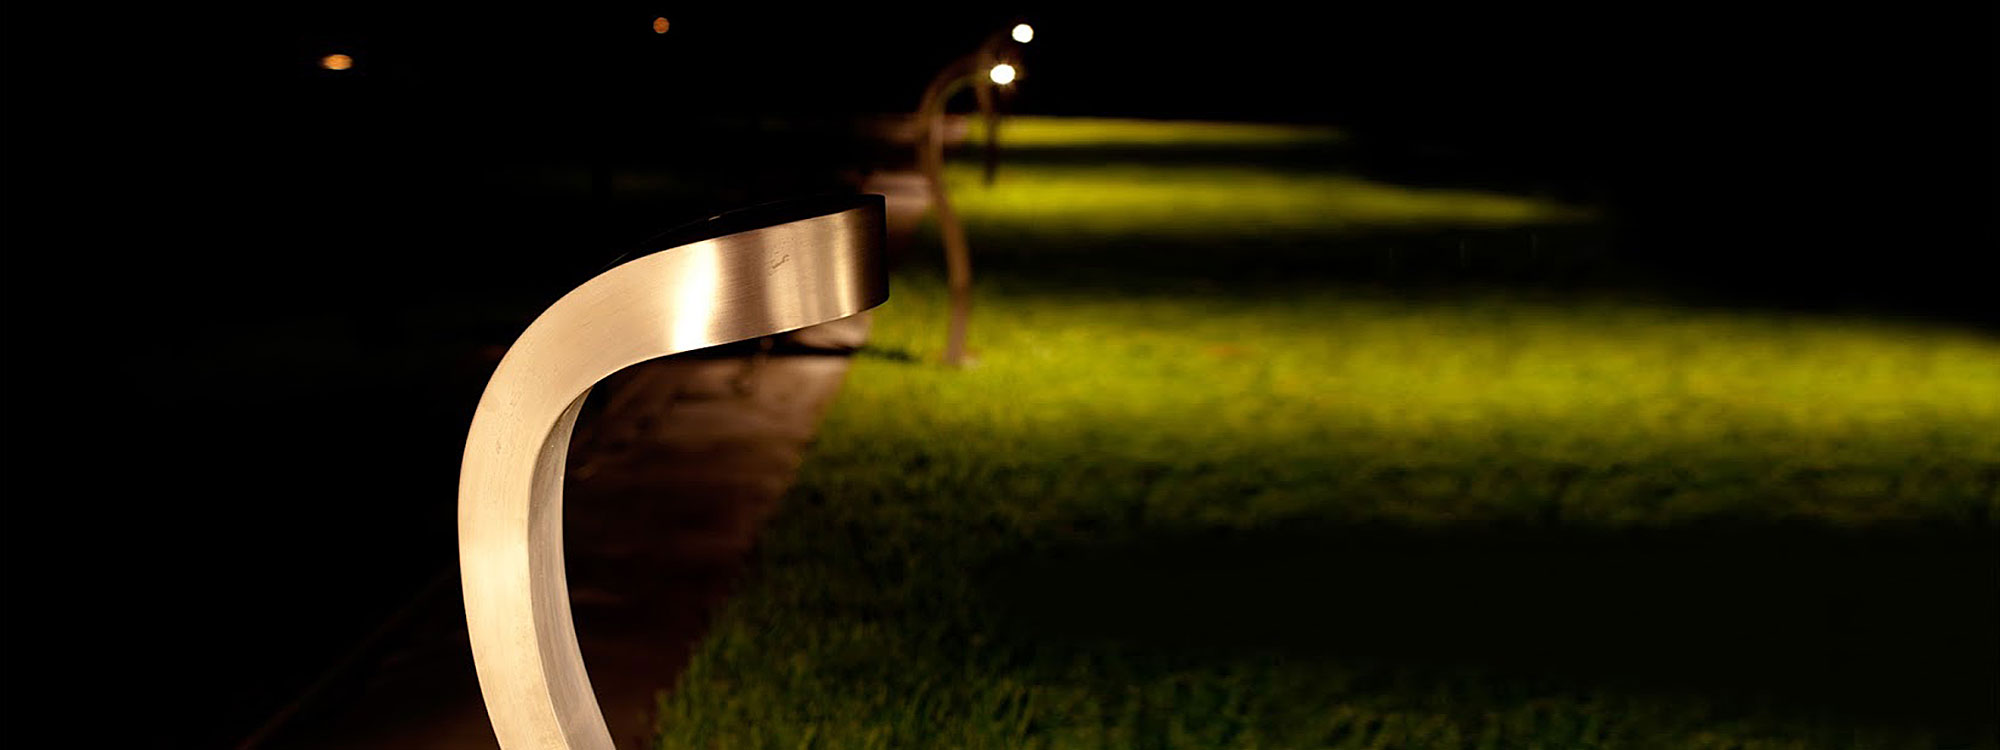 Royal Botania Outdoor Lighting - Cobra High Quality Modern Garden Lighting.